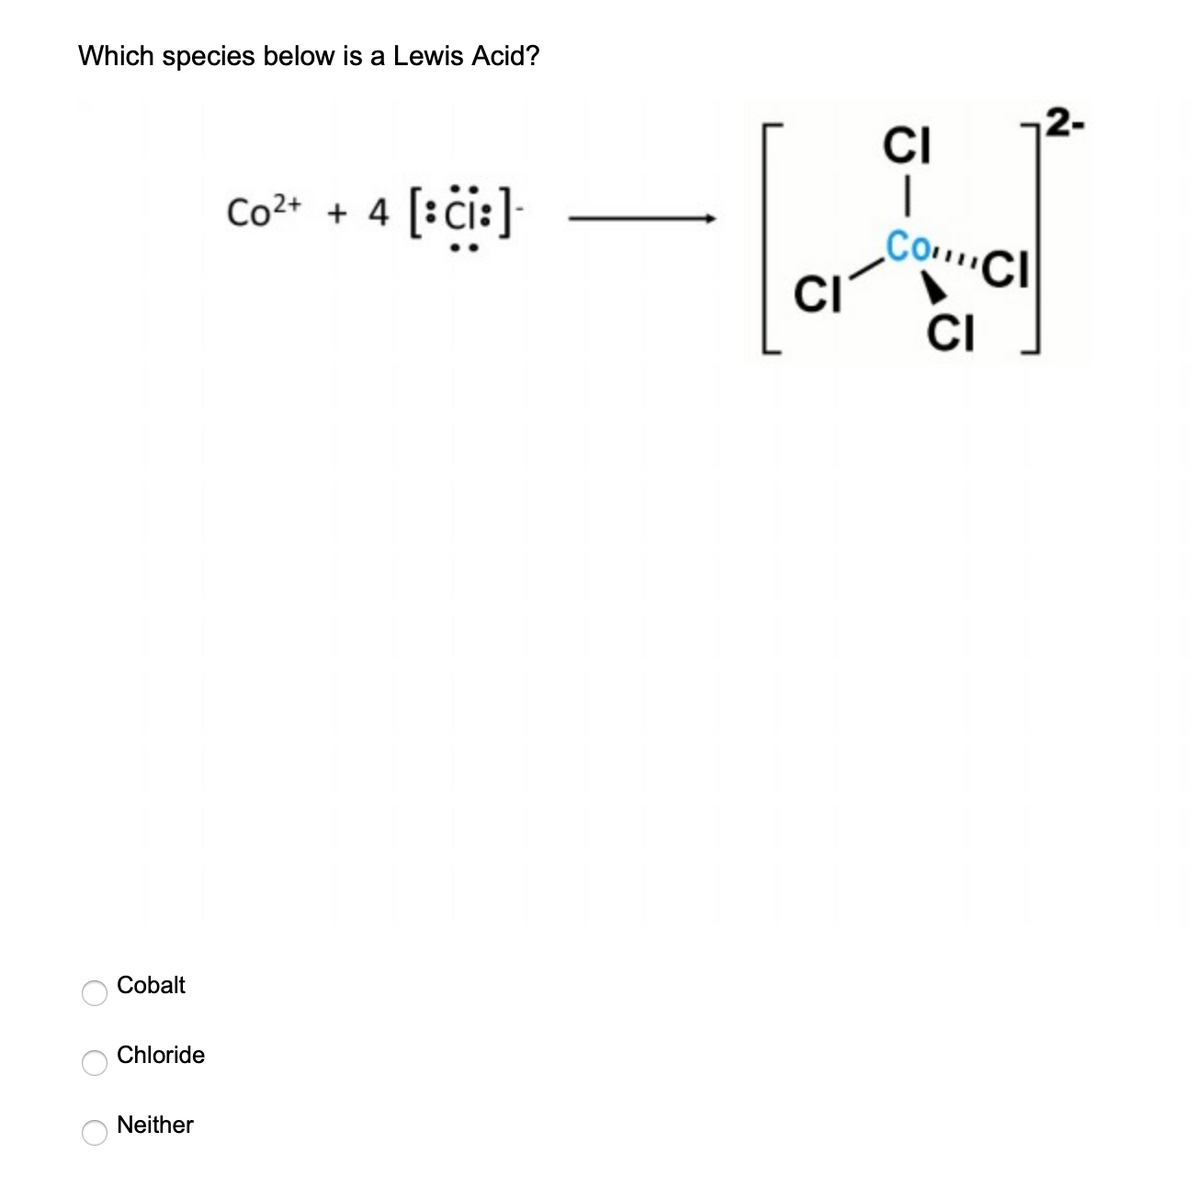 Which species below is a Lewis Acid?
2-
CI
Co²* + 4 [:ċi:]
COCI
CI
CI
Cobalt
Chloride
Neither
